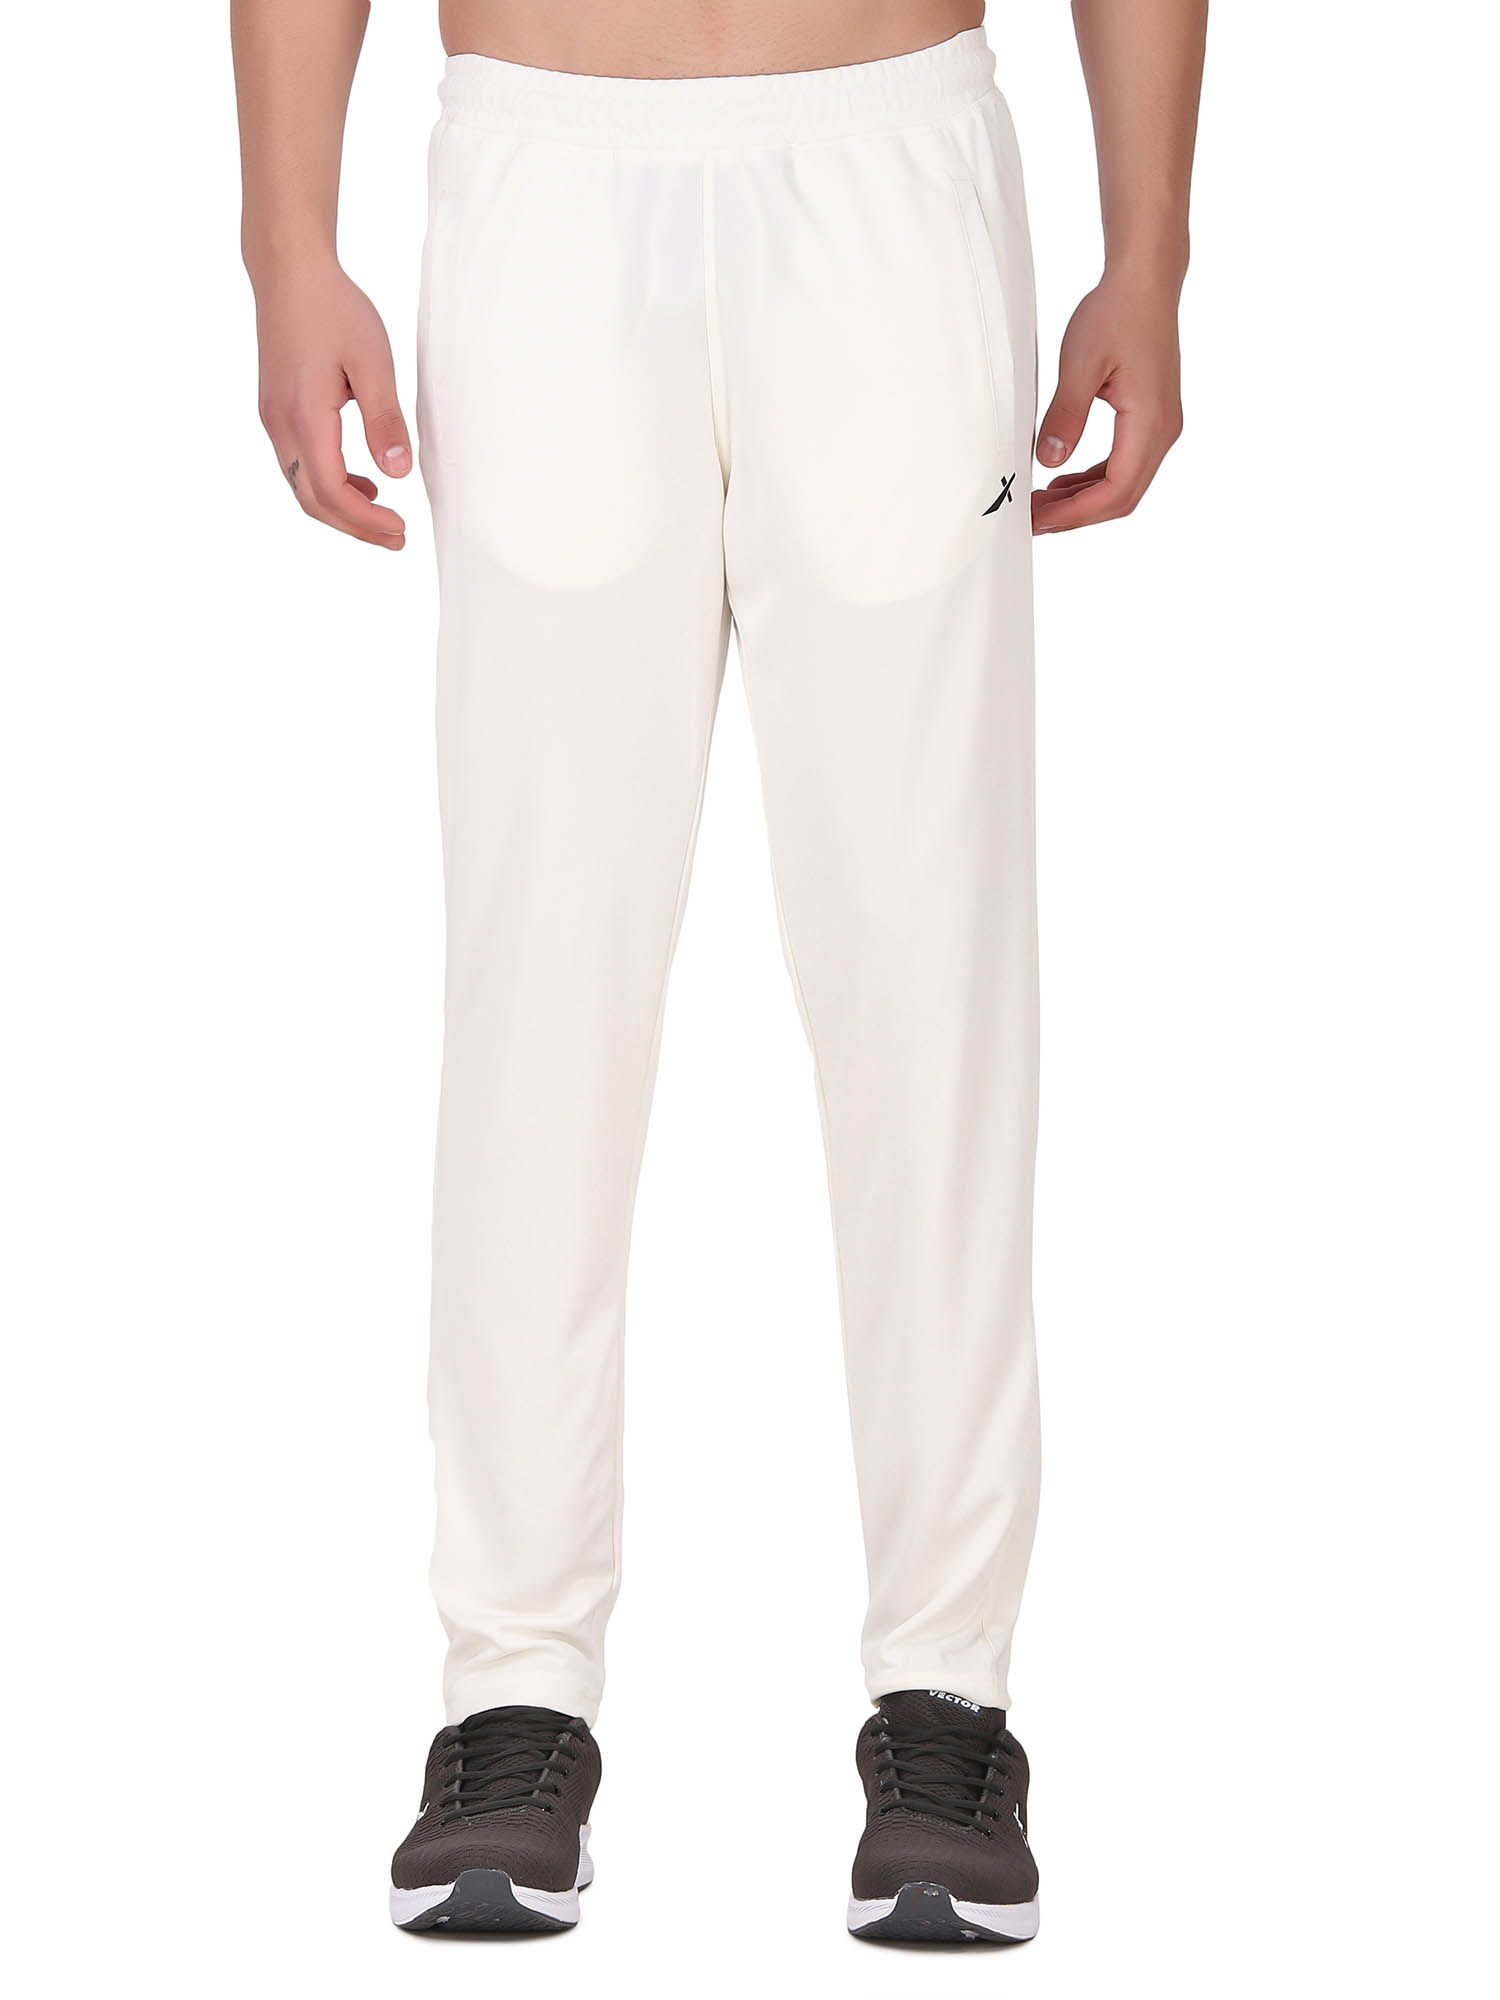 Gray-Nicolls Elite White Cricket Trousers Pants Junior Size 4 6 8 10 12 14  16 | eBay